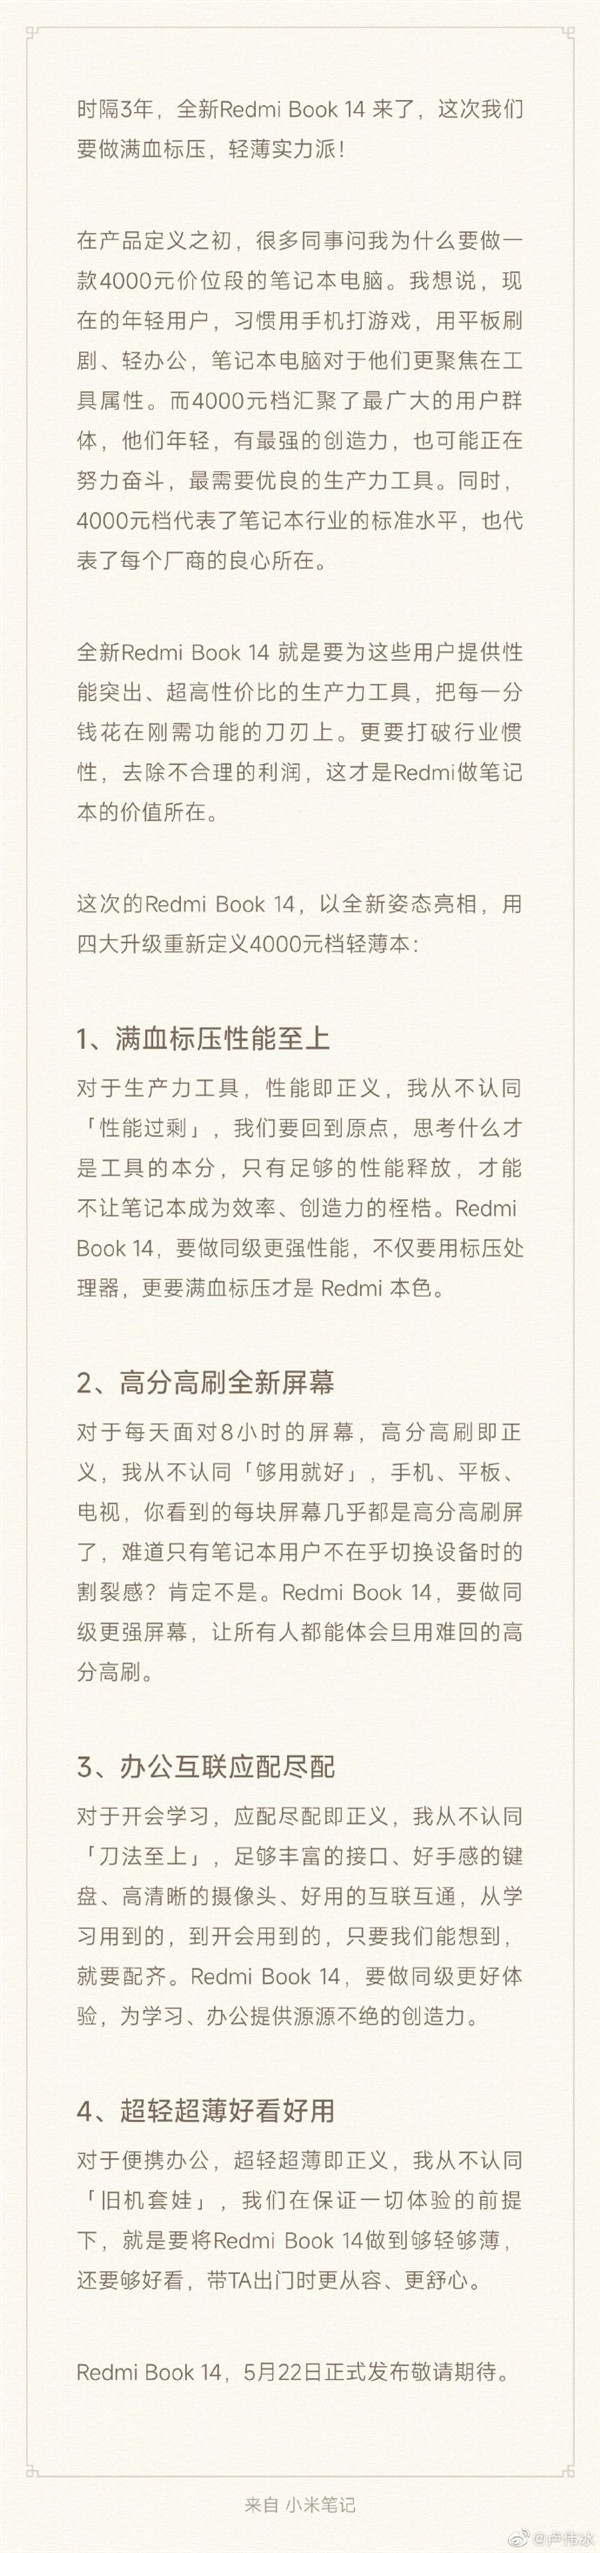 Redmi Book 14 官宣：5月22日发布，卢伟冰揭秘，重新定义轻薄本